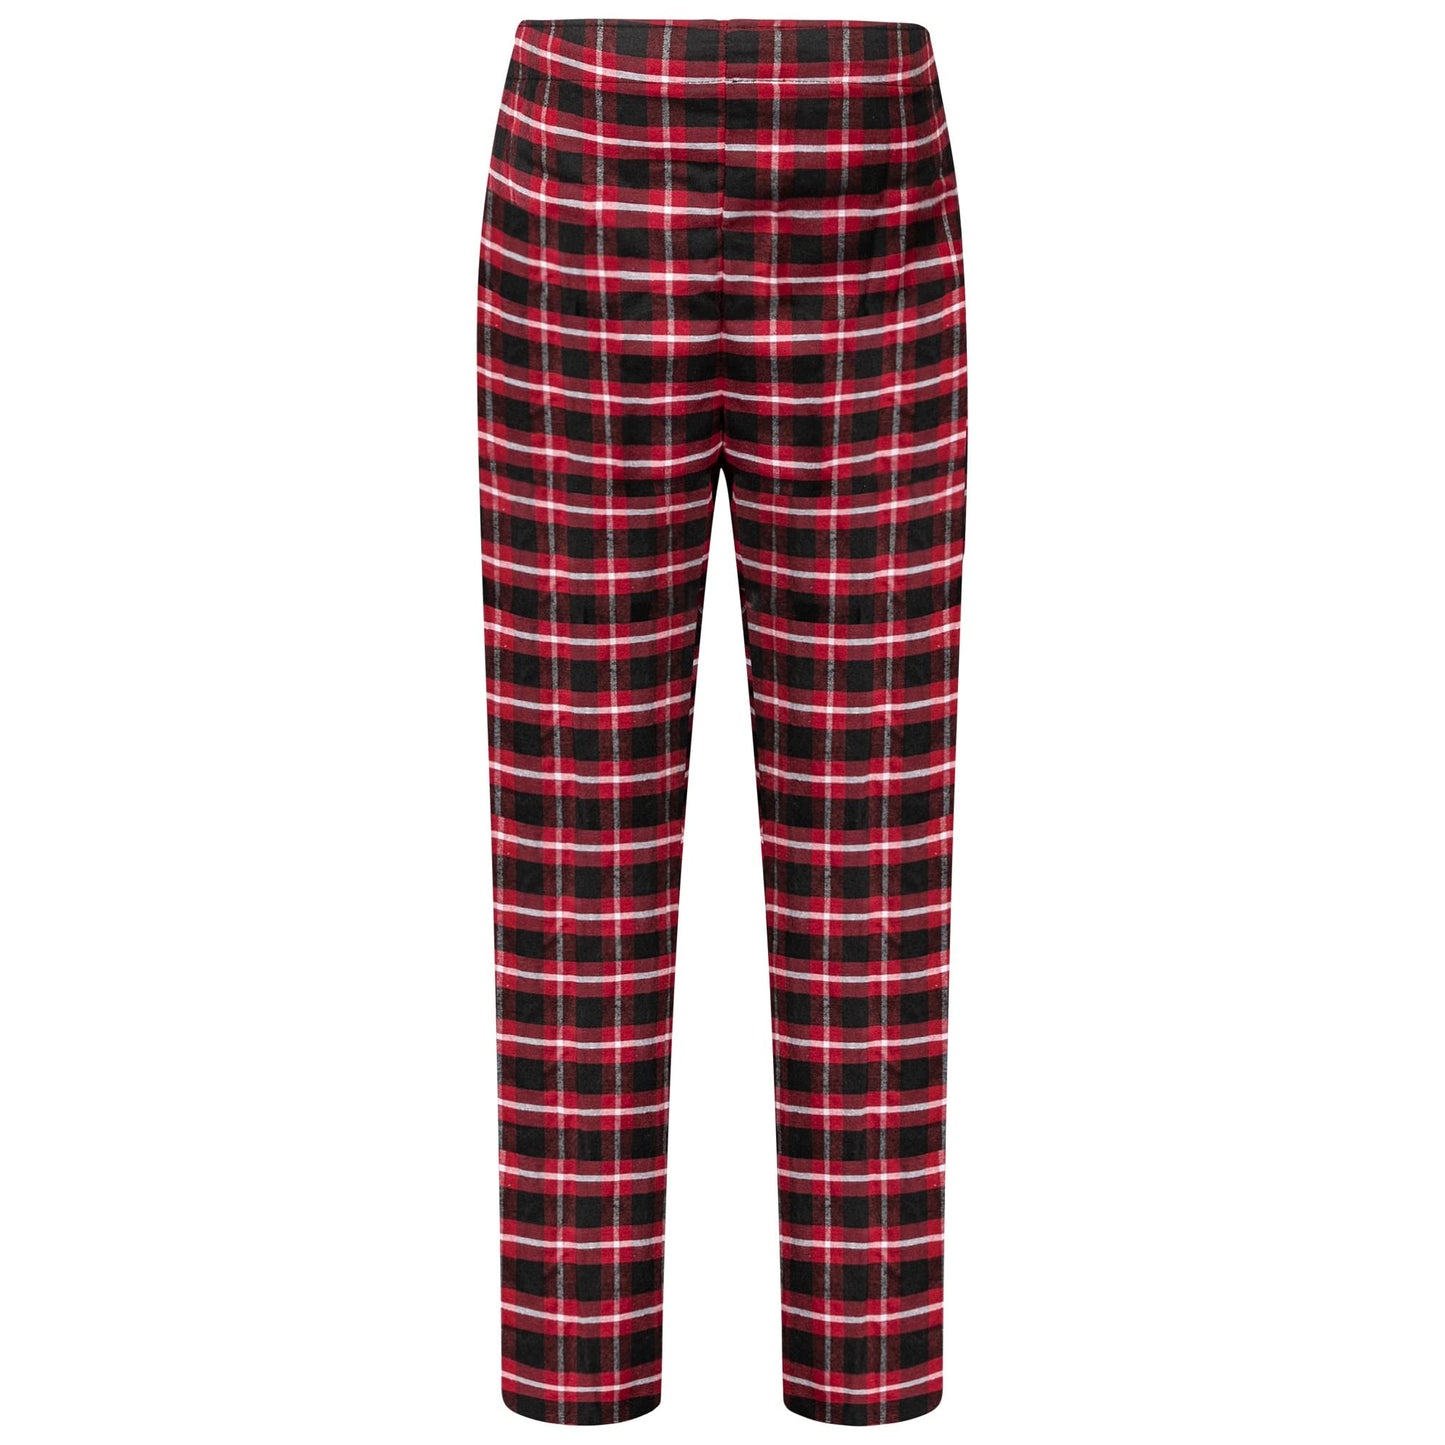 Big Boys' Pajama Bottoms Pants - Flannel Cotton Lounge Sleepwear with Pockets. Medium